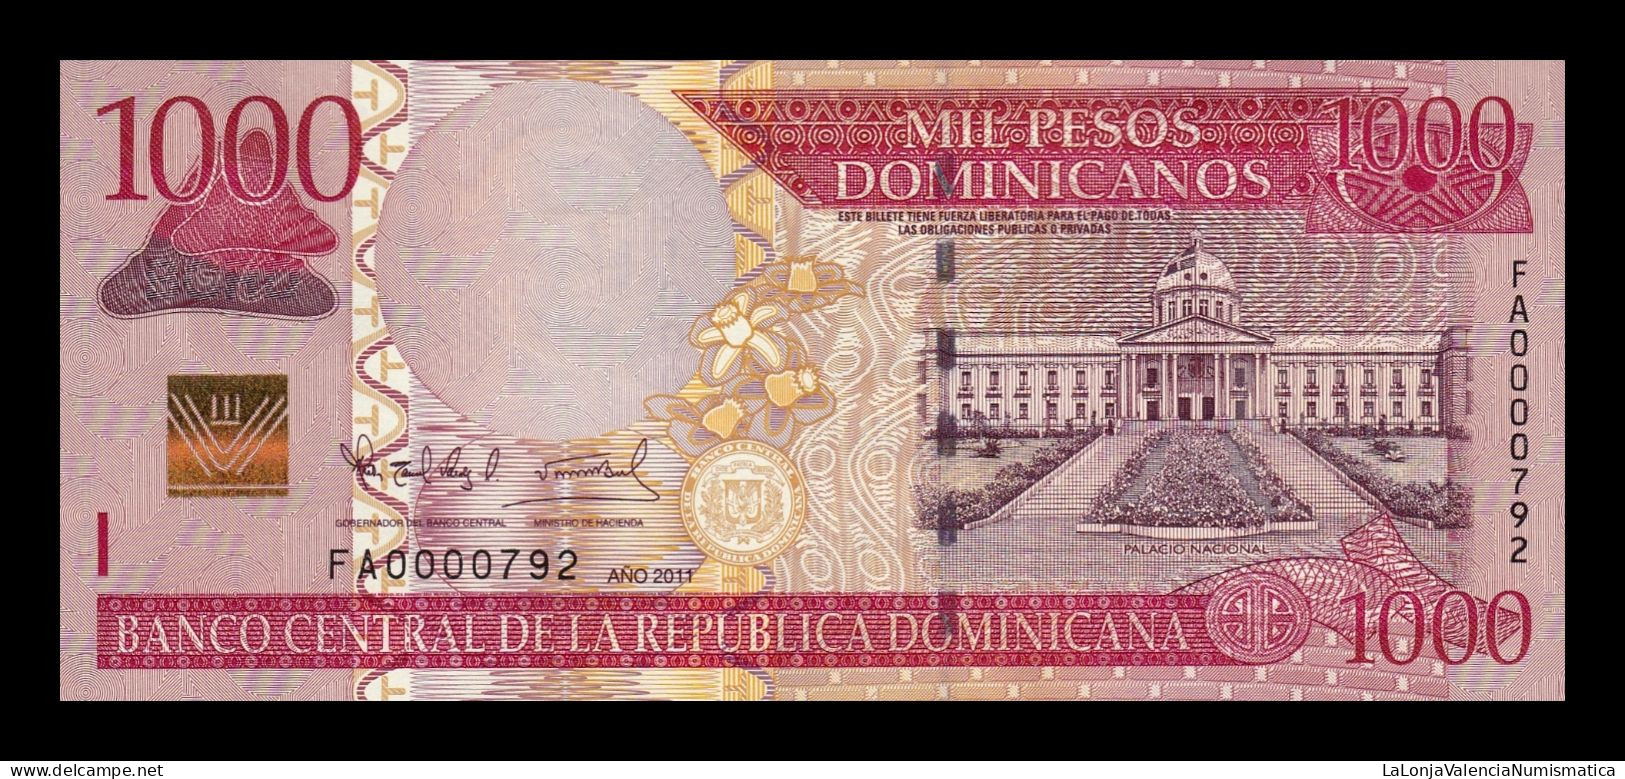 República Dominicana 1000 Pesos Dominicanos 2011 Pick 187a Low Serial 792 Sc Unc - Dominicana